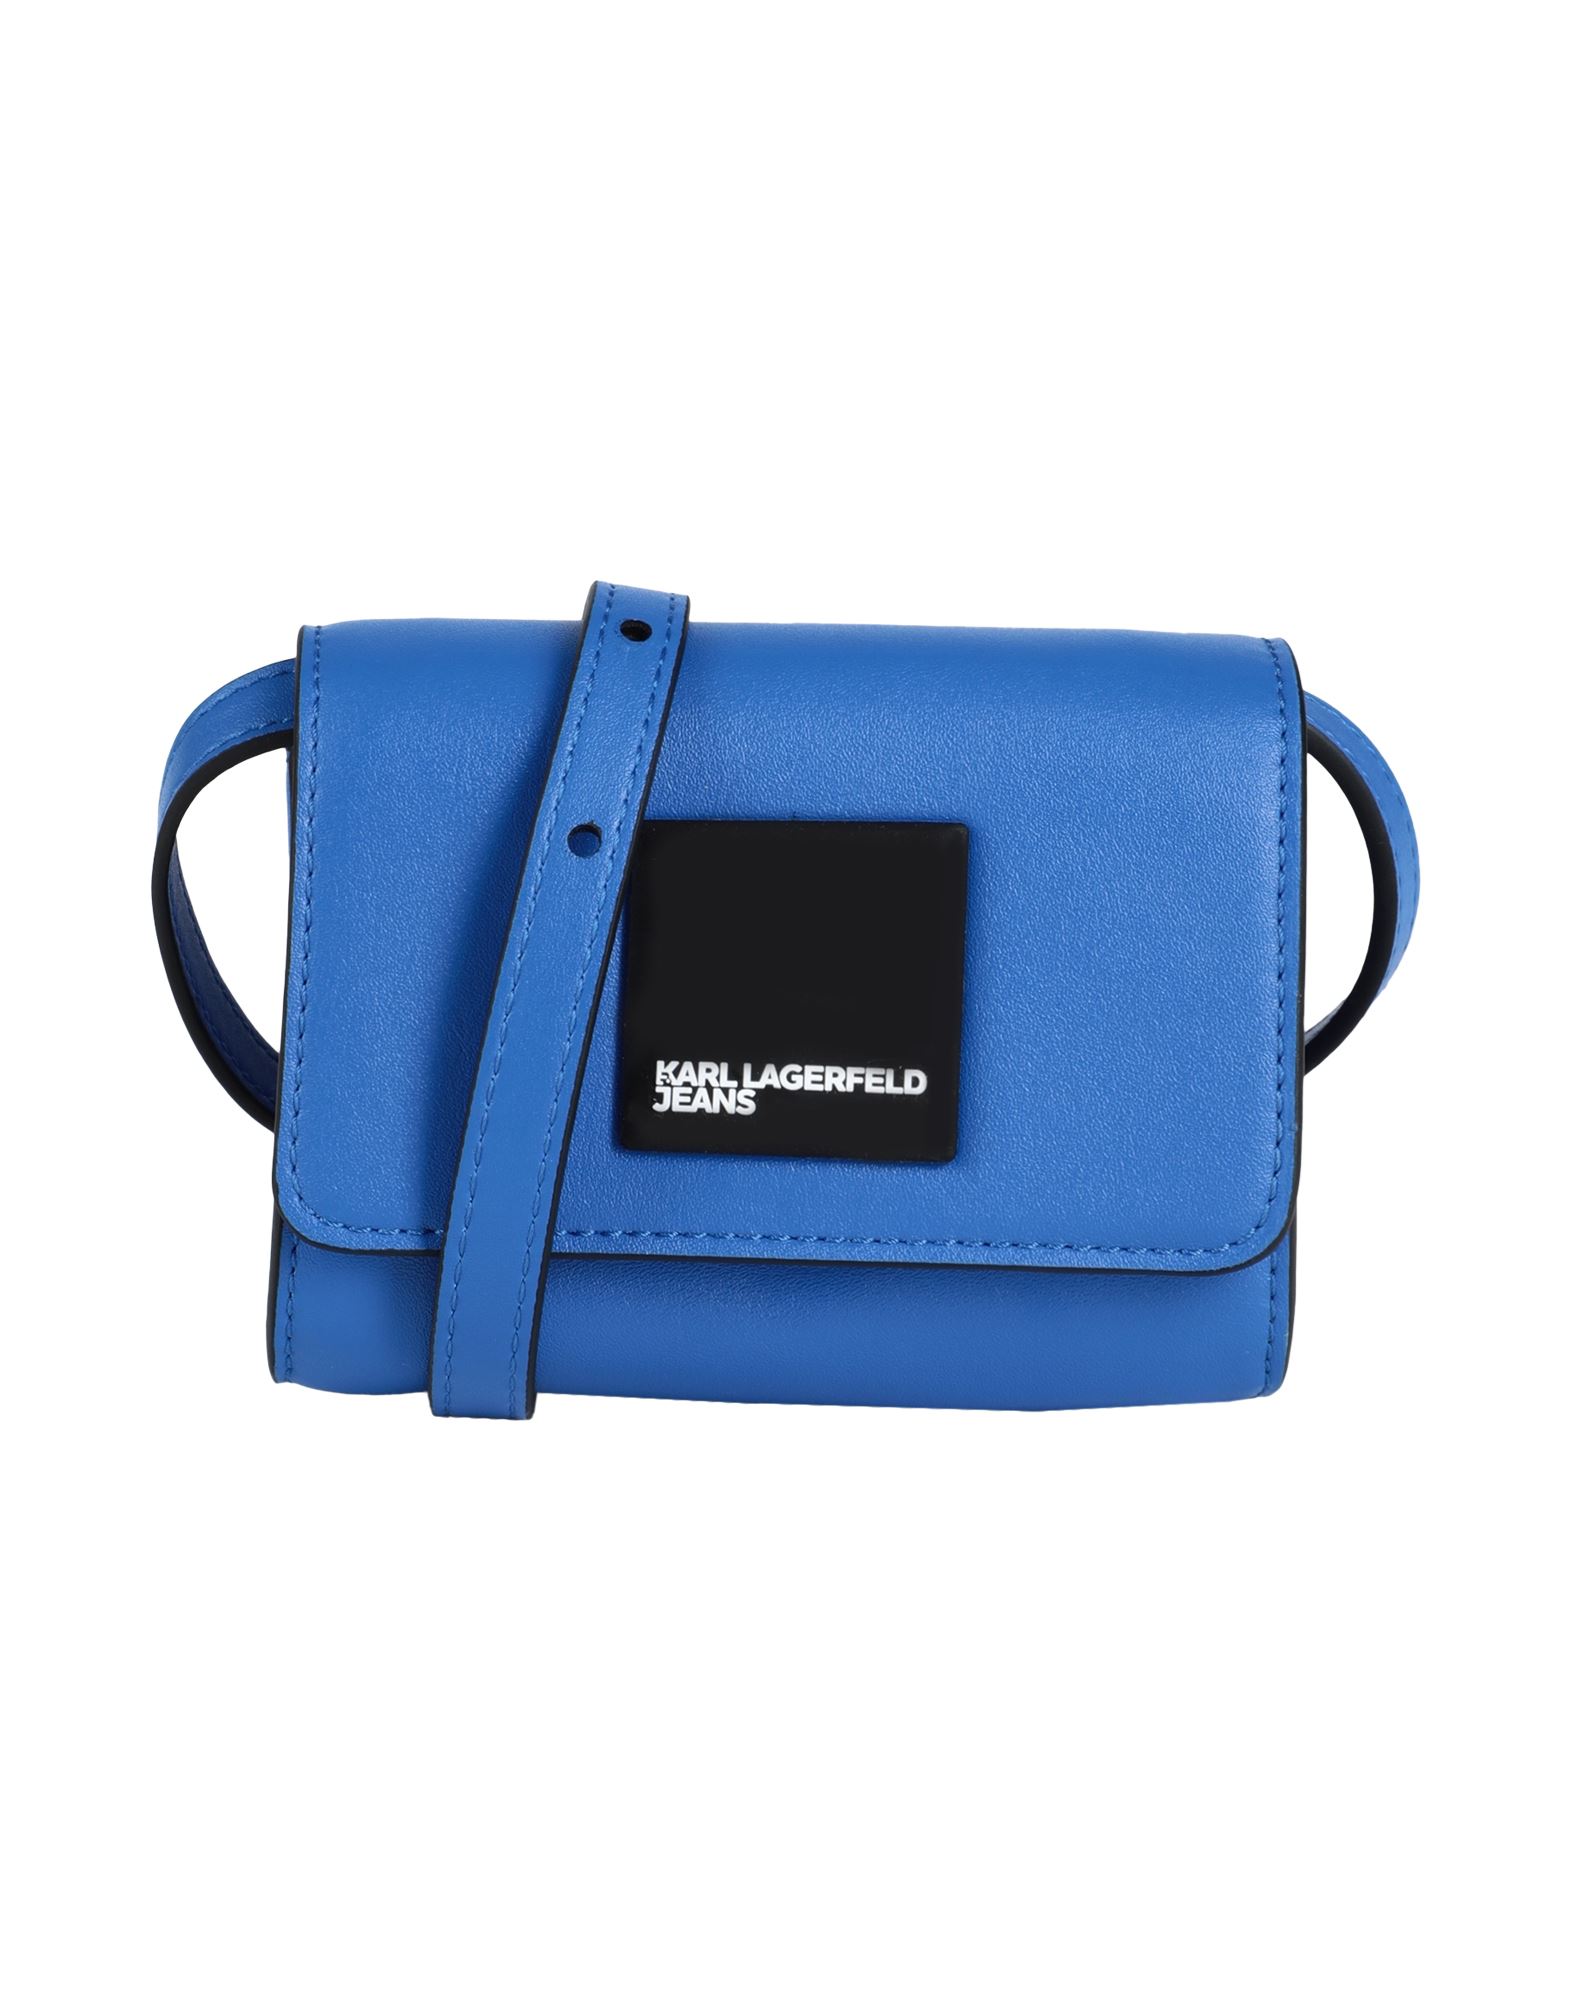 Karl Lagerfeld Jeans Handbags In Blue